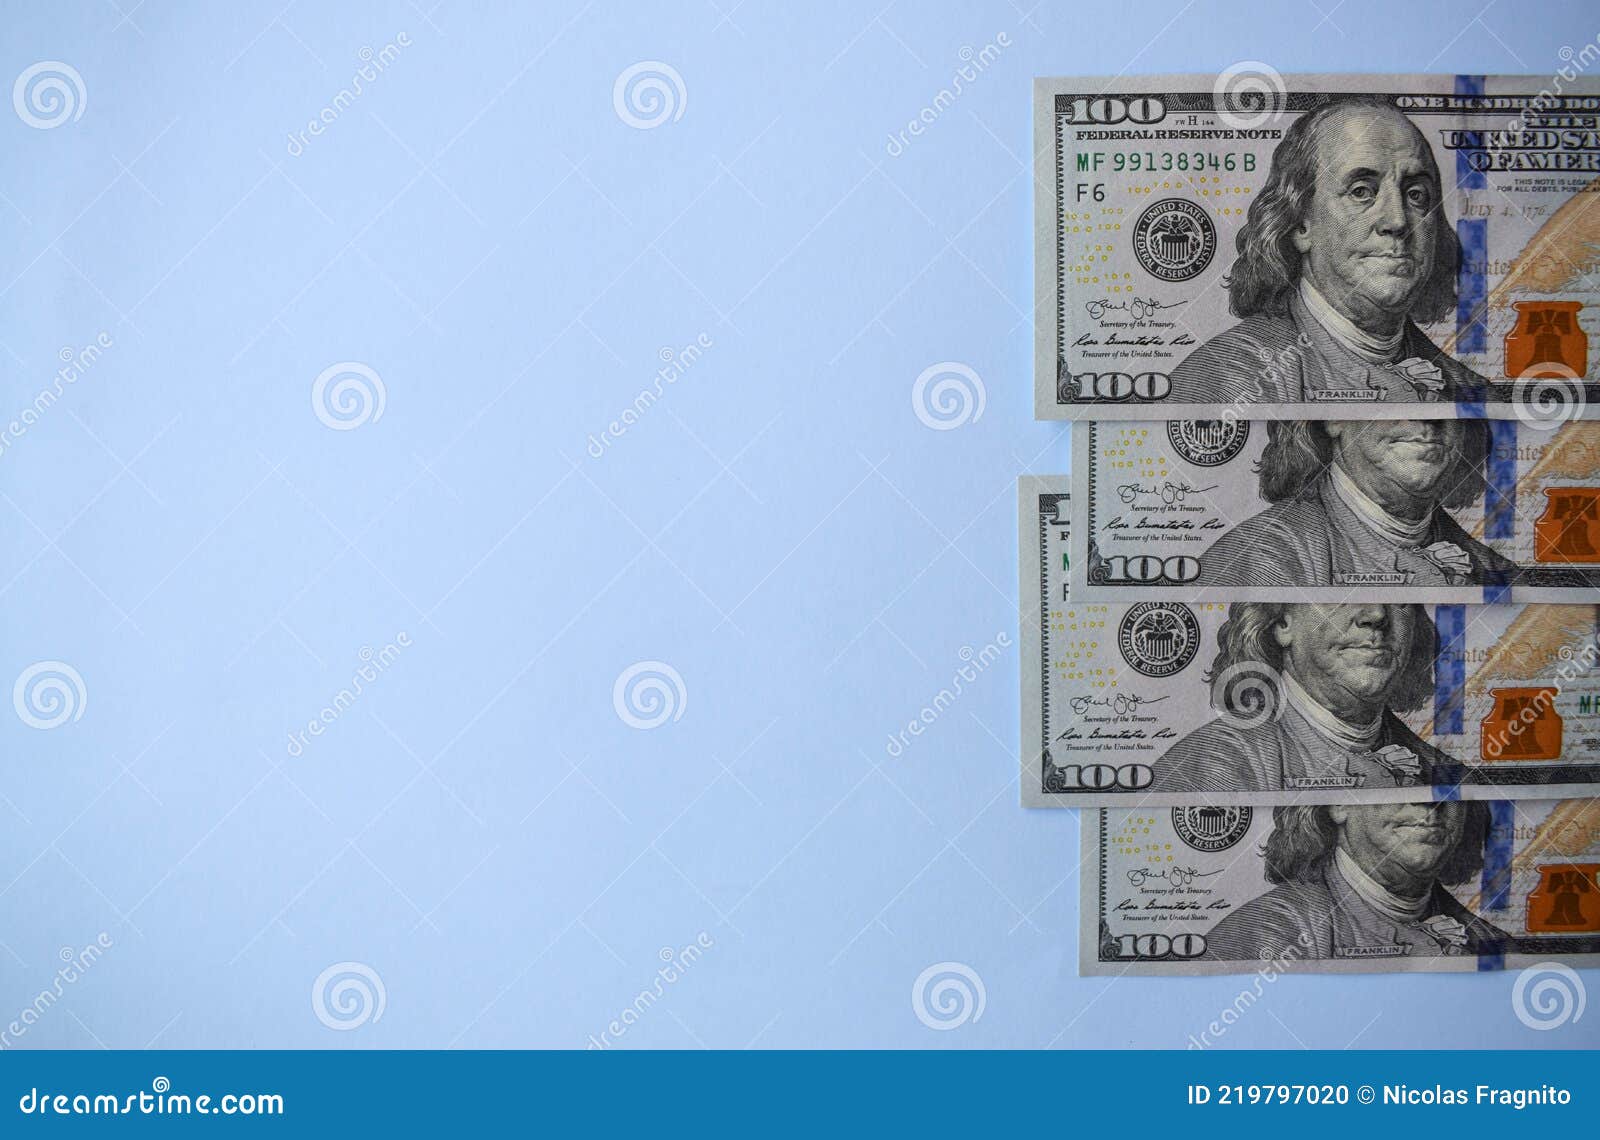 american dollar on white background